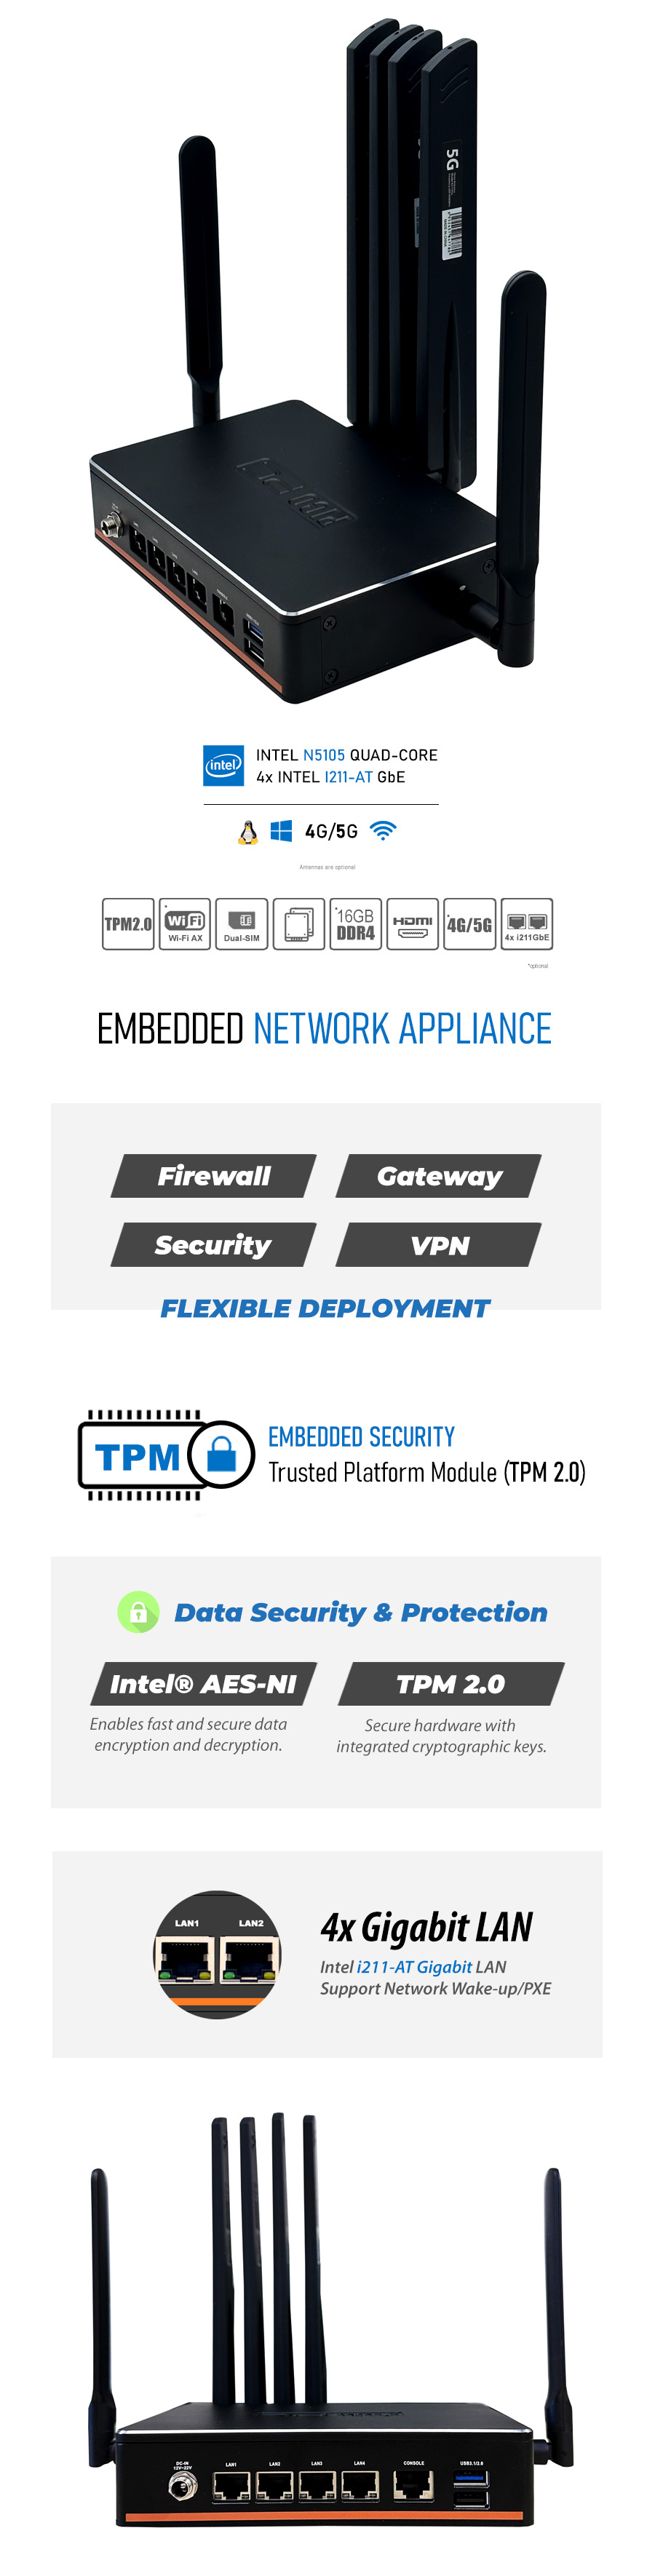 Intel® N5105 4 LAN i211 5G CPE Fanless Network Appliance SD-WAN Security Gateway with TPM - MNHO-096 | Image